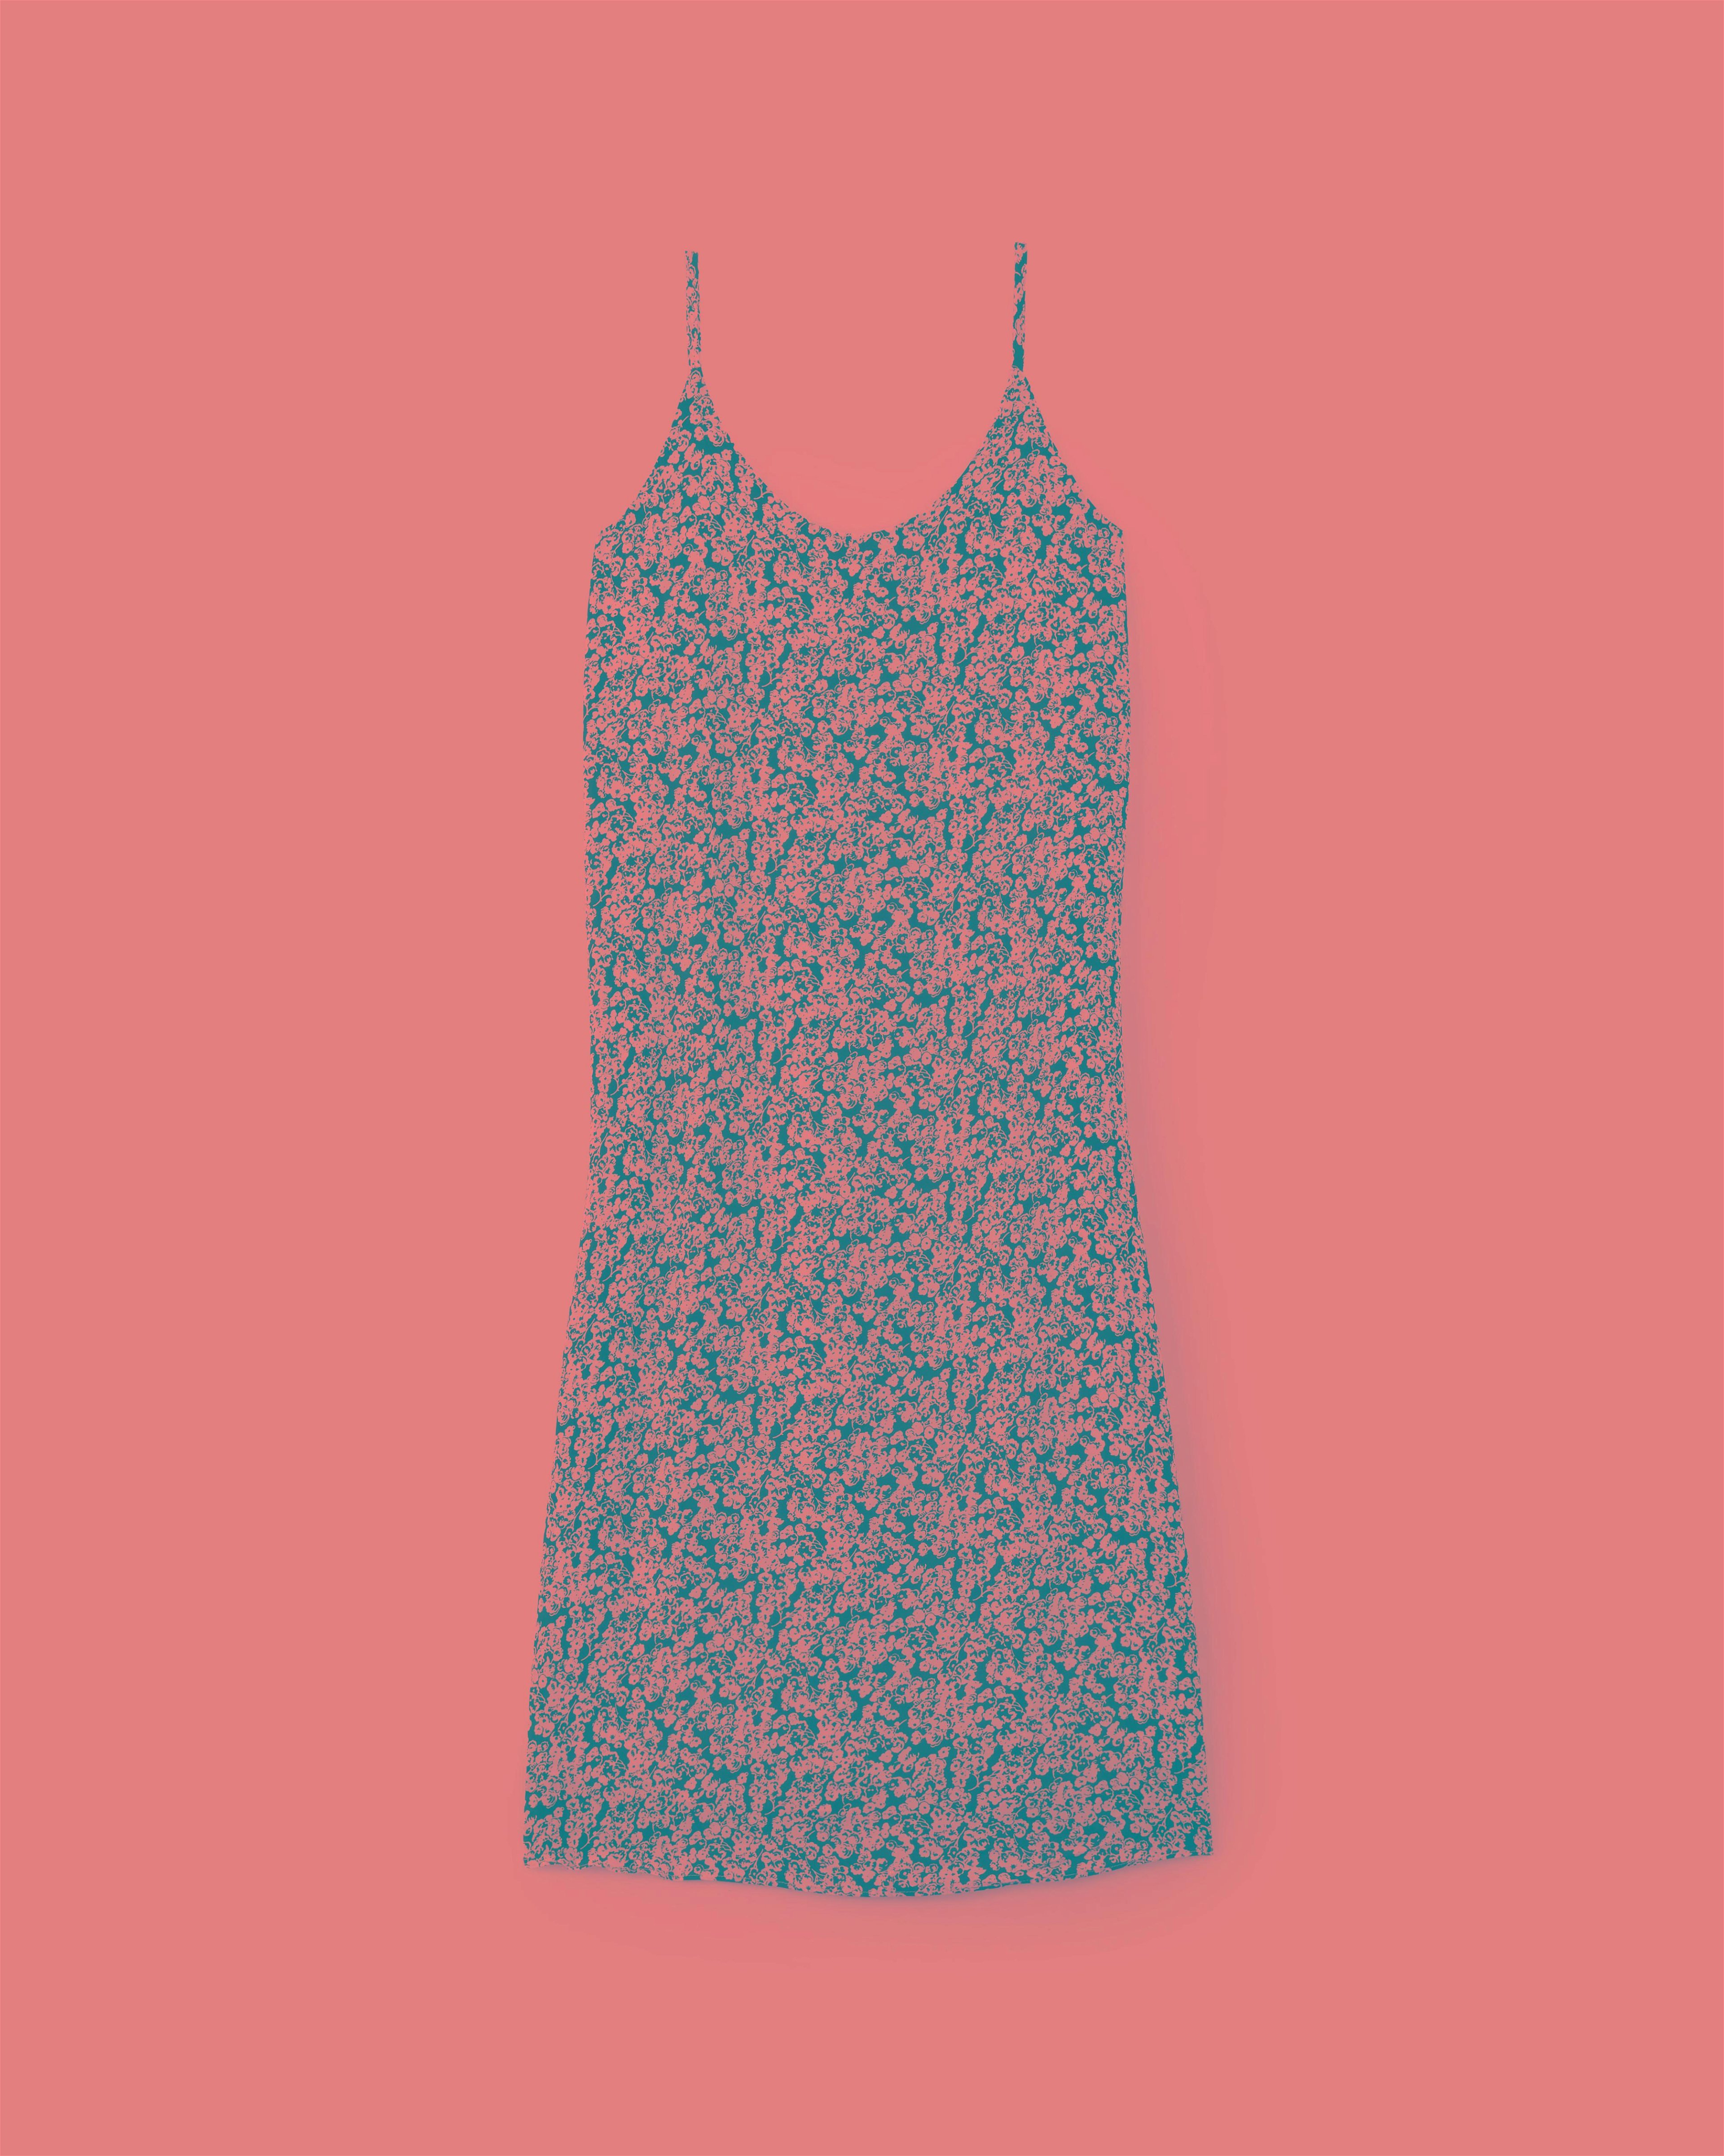 The Summer Slip Dress by EVERLANE